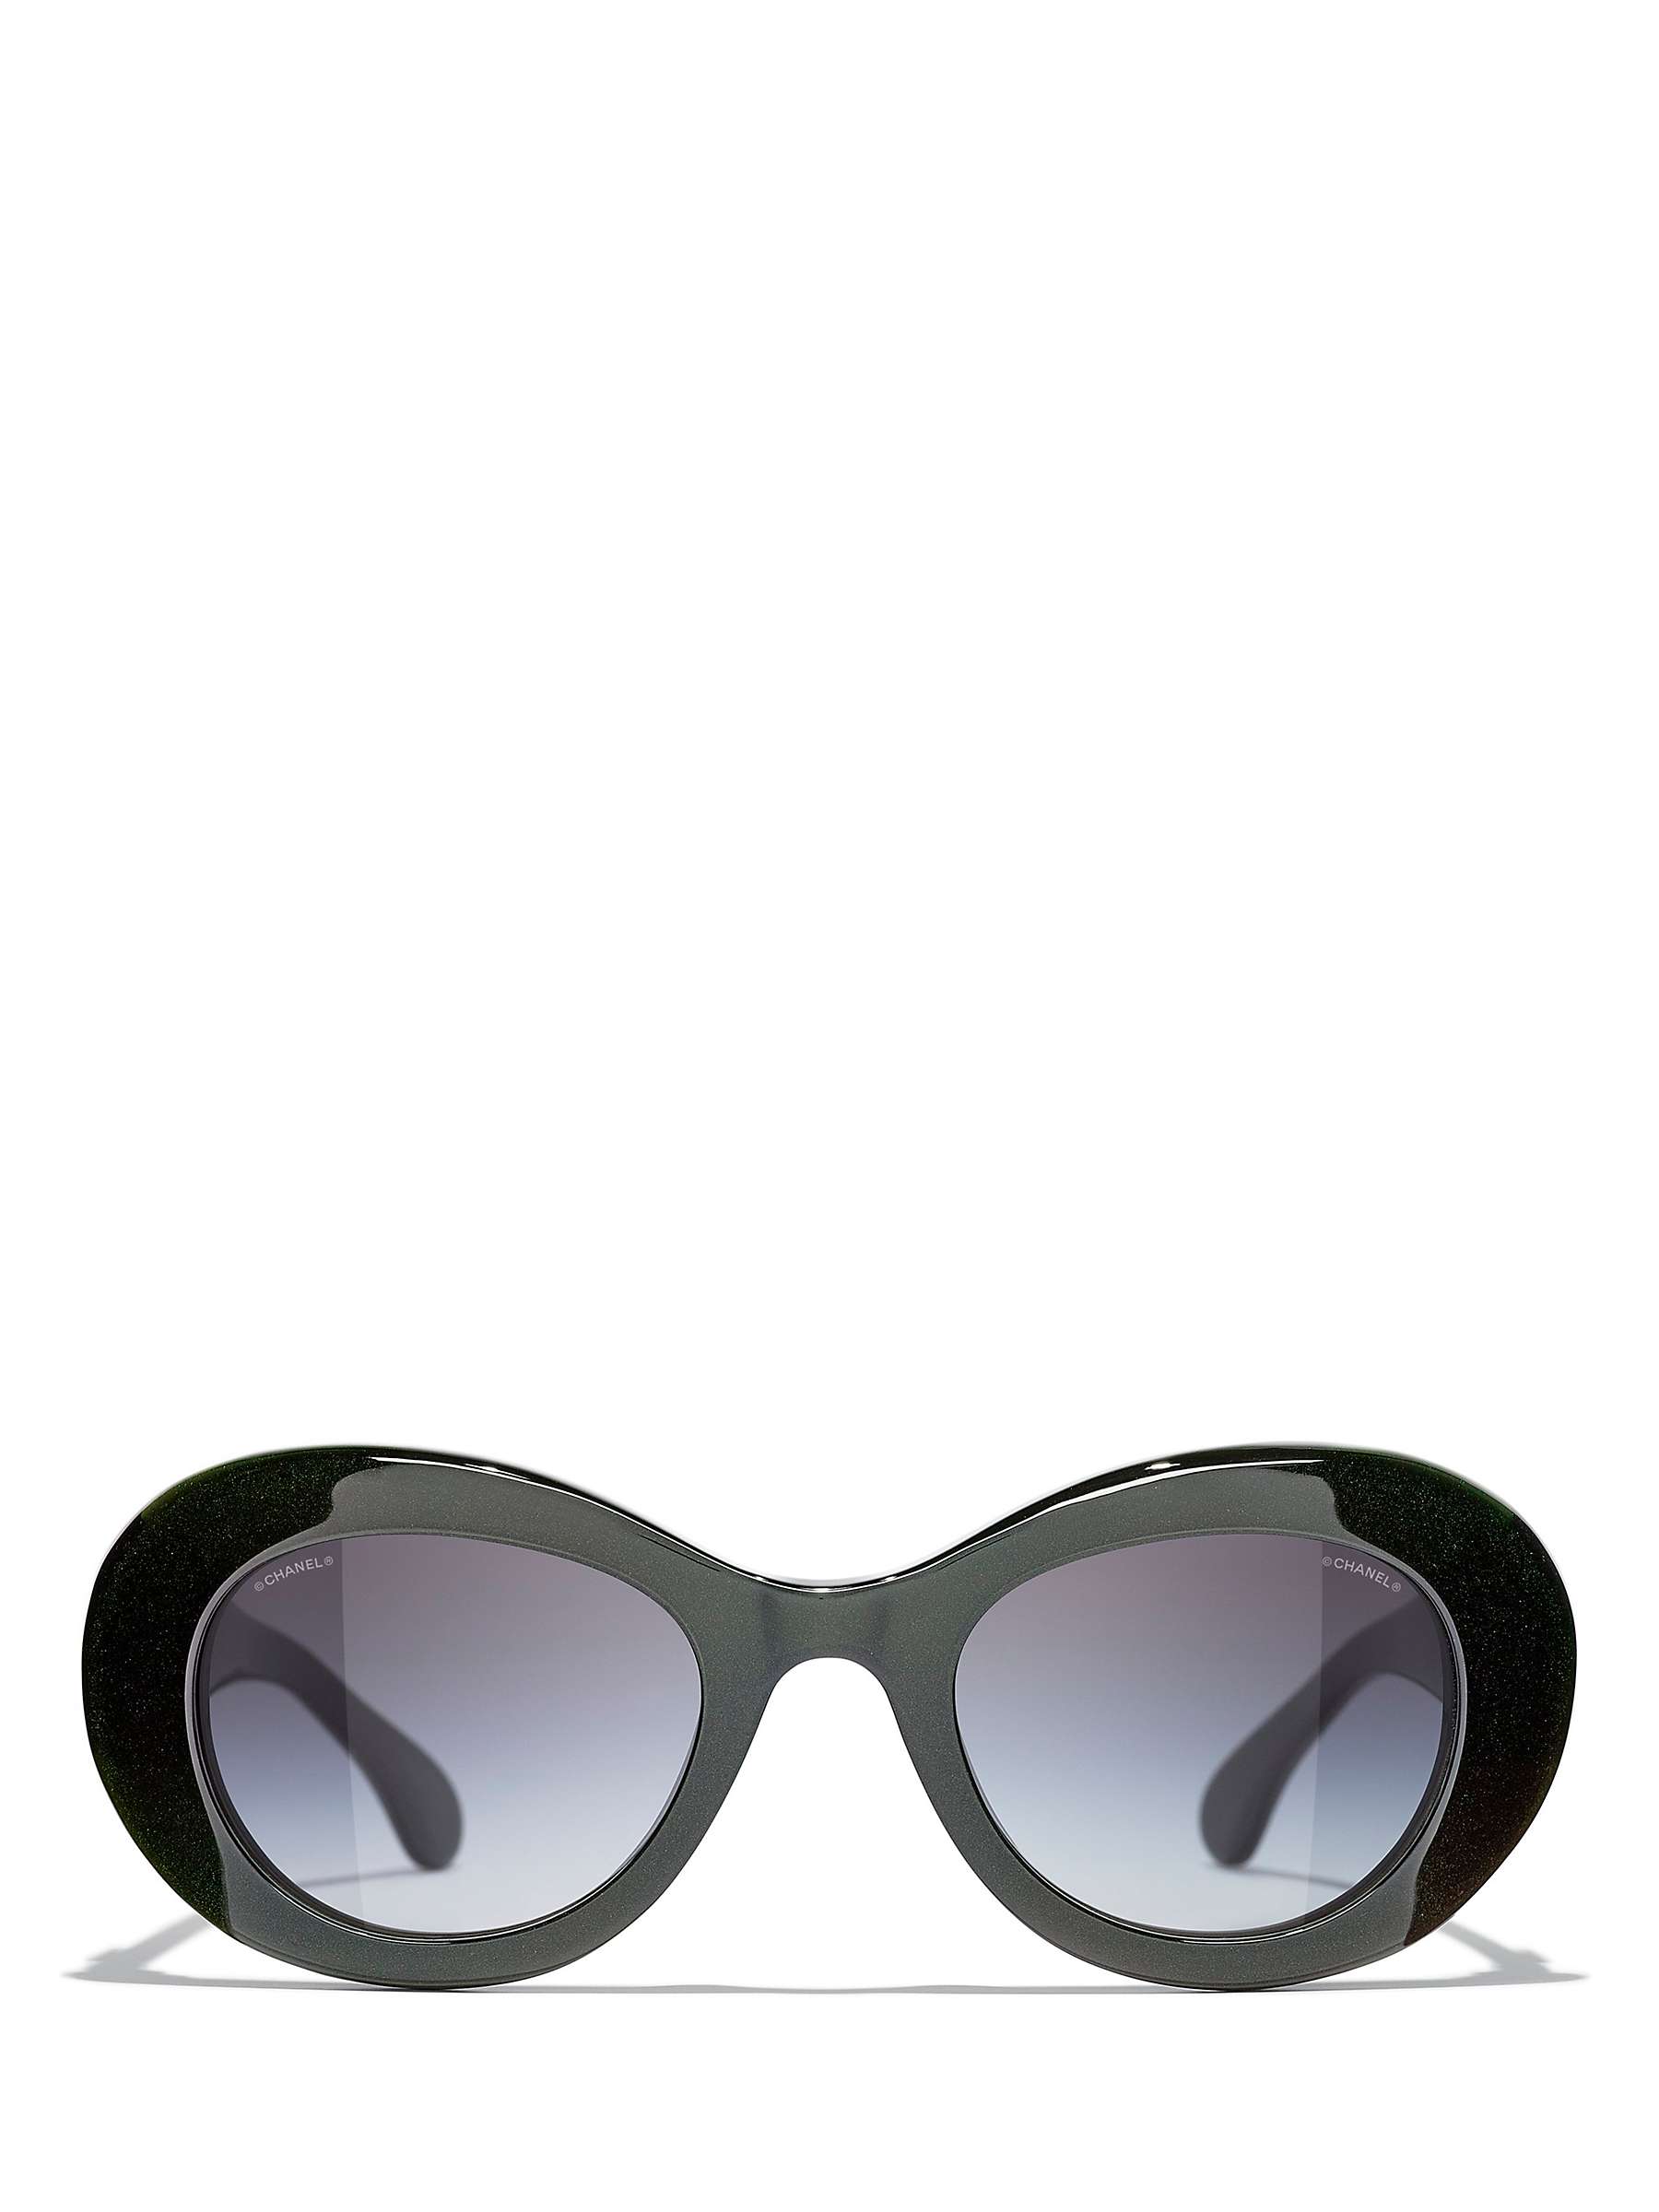 CHANEL Oval Sunglasses CH5469B Iridescent Green/Blue Gradient